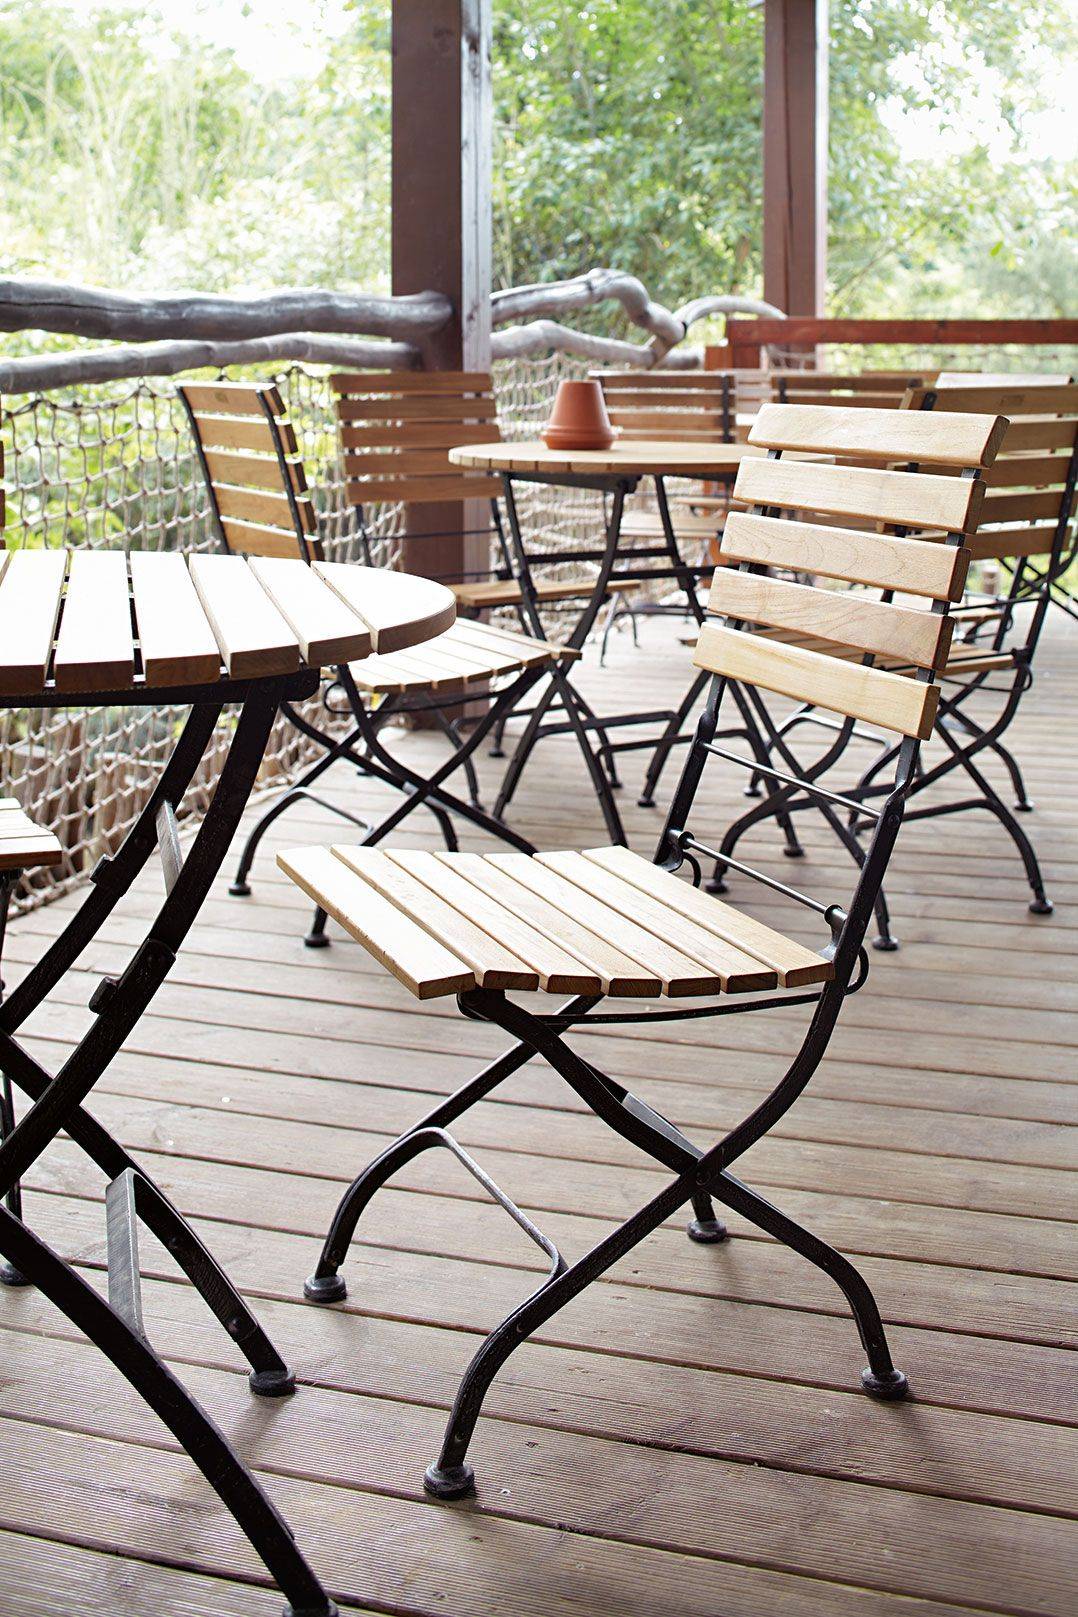 Outdoor Beer garden chairs for your restaurant or hotel